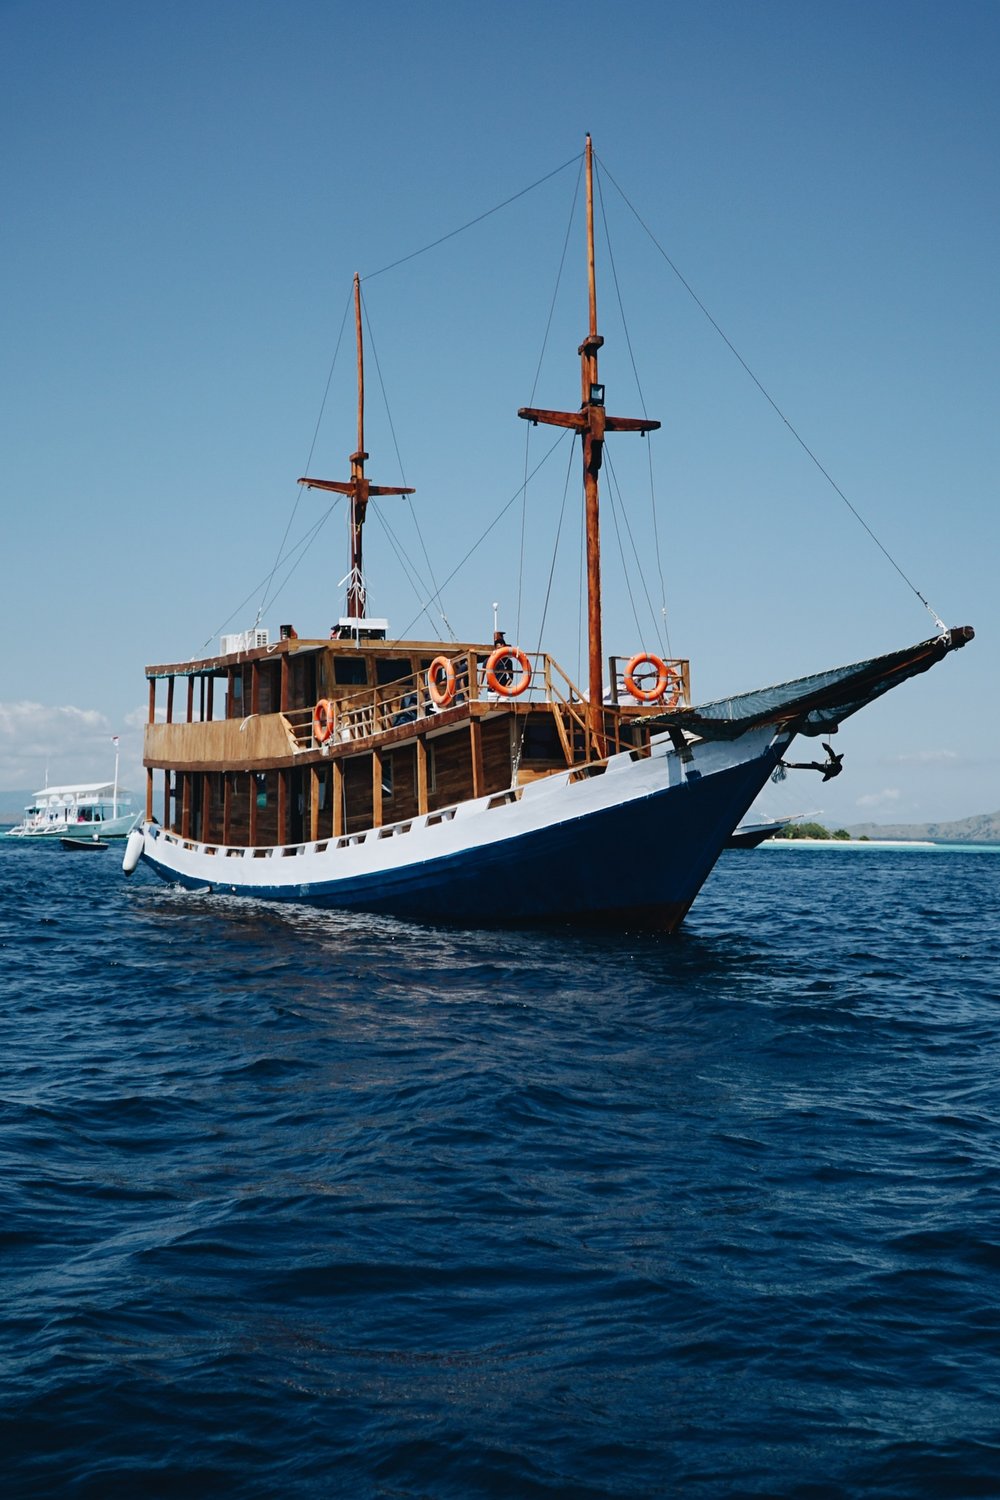 Sewa Kapal Phinisi Labuan Bajo "Papiton Lopi" - Indonesian Local Vessel Phinisi - Tour - Harga - Charter - Open Trip 2022